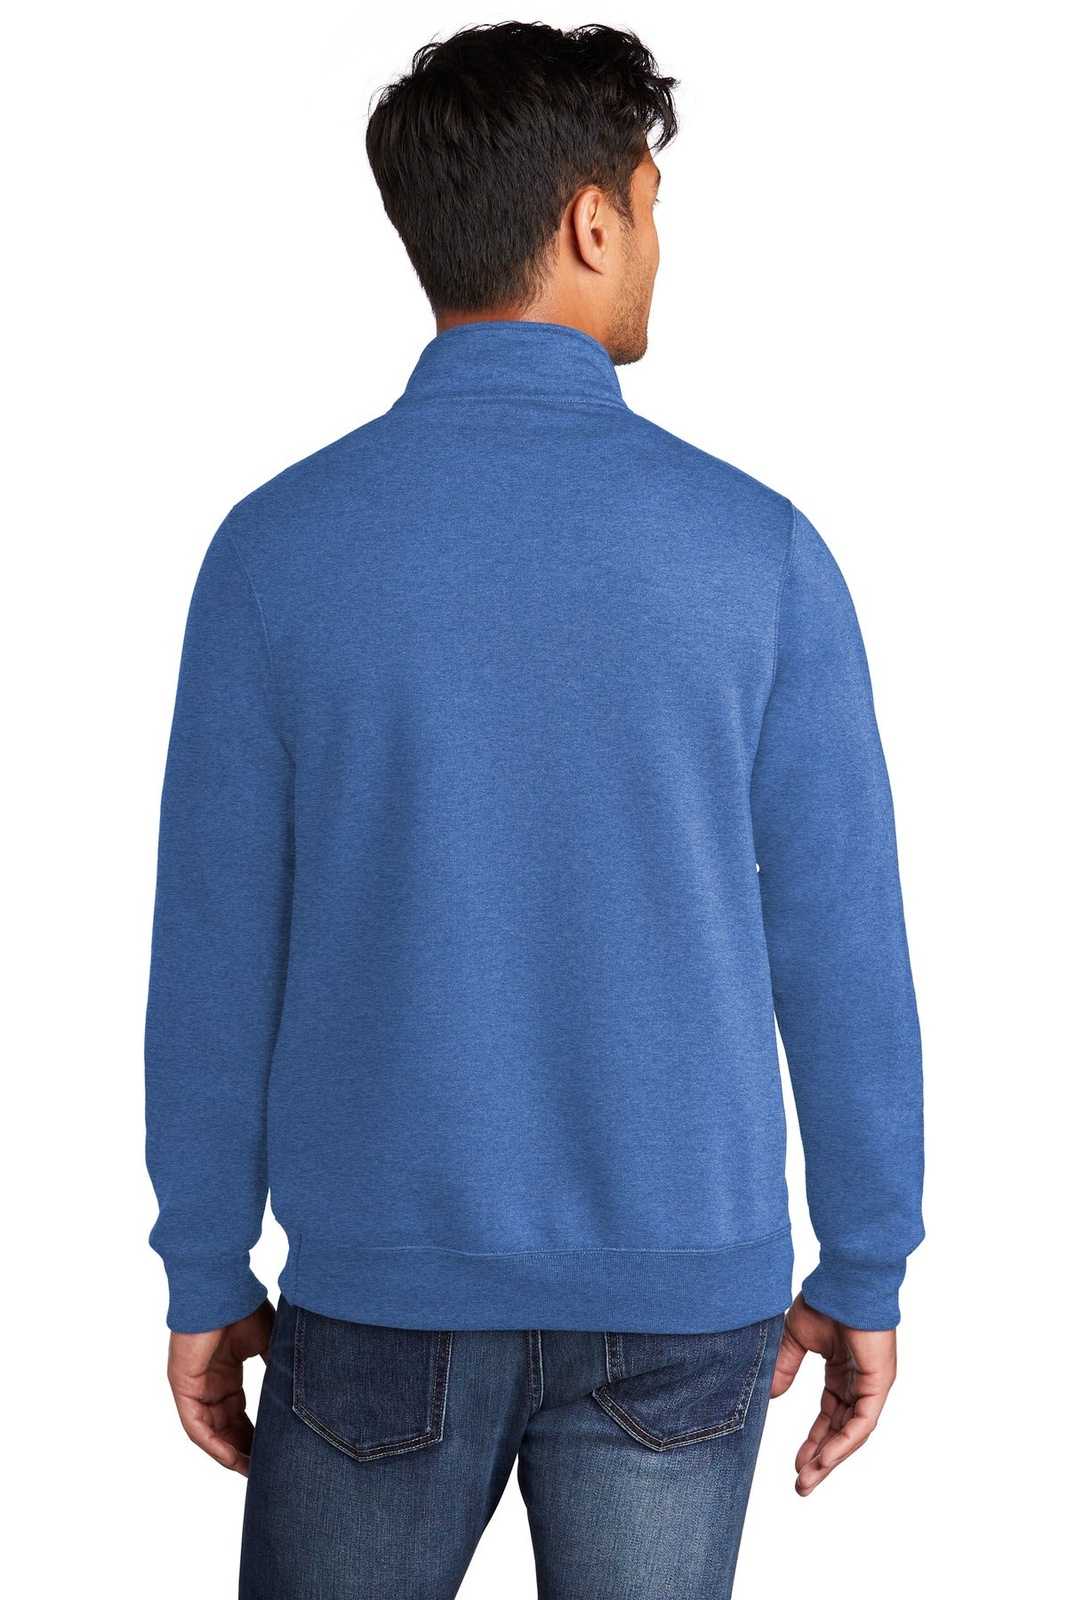 Port &amp; Company PC78Q Core Fleece 1/4-Zip Pullover Sweatshirt - Heather Royal - HIT a Double - 2